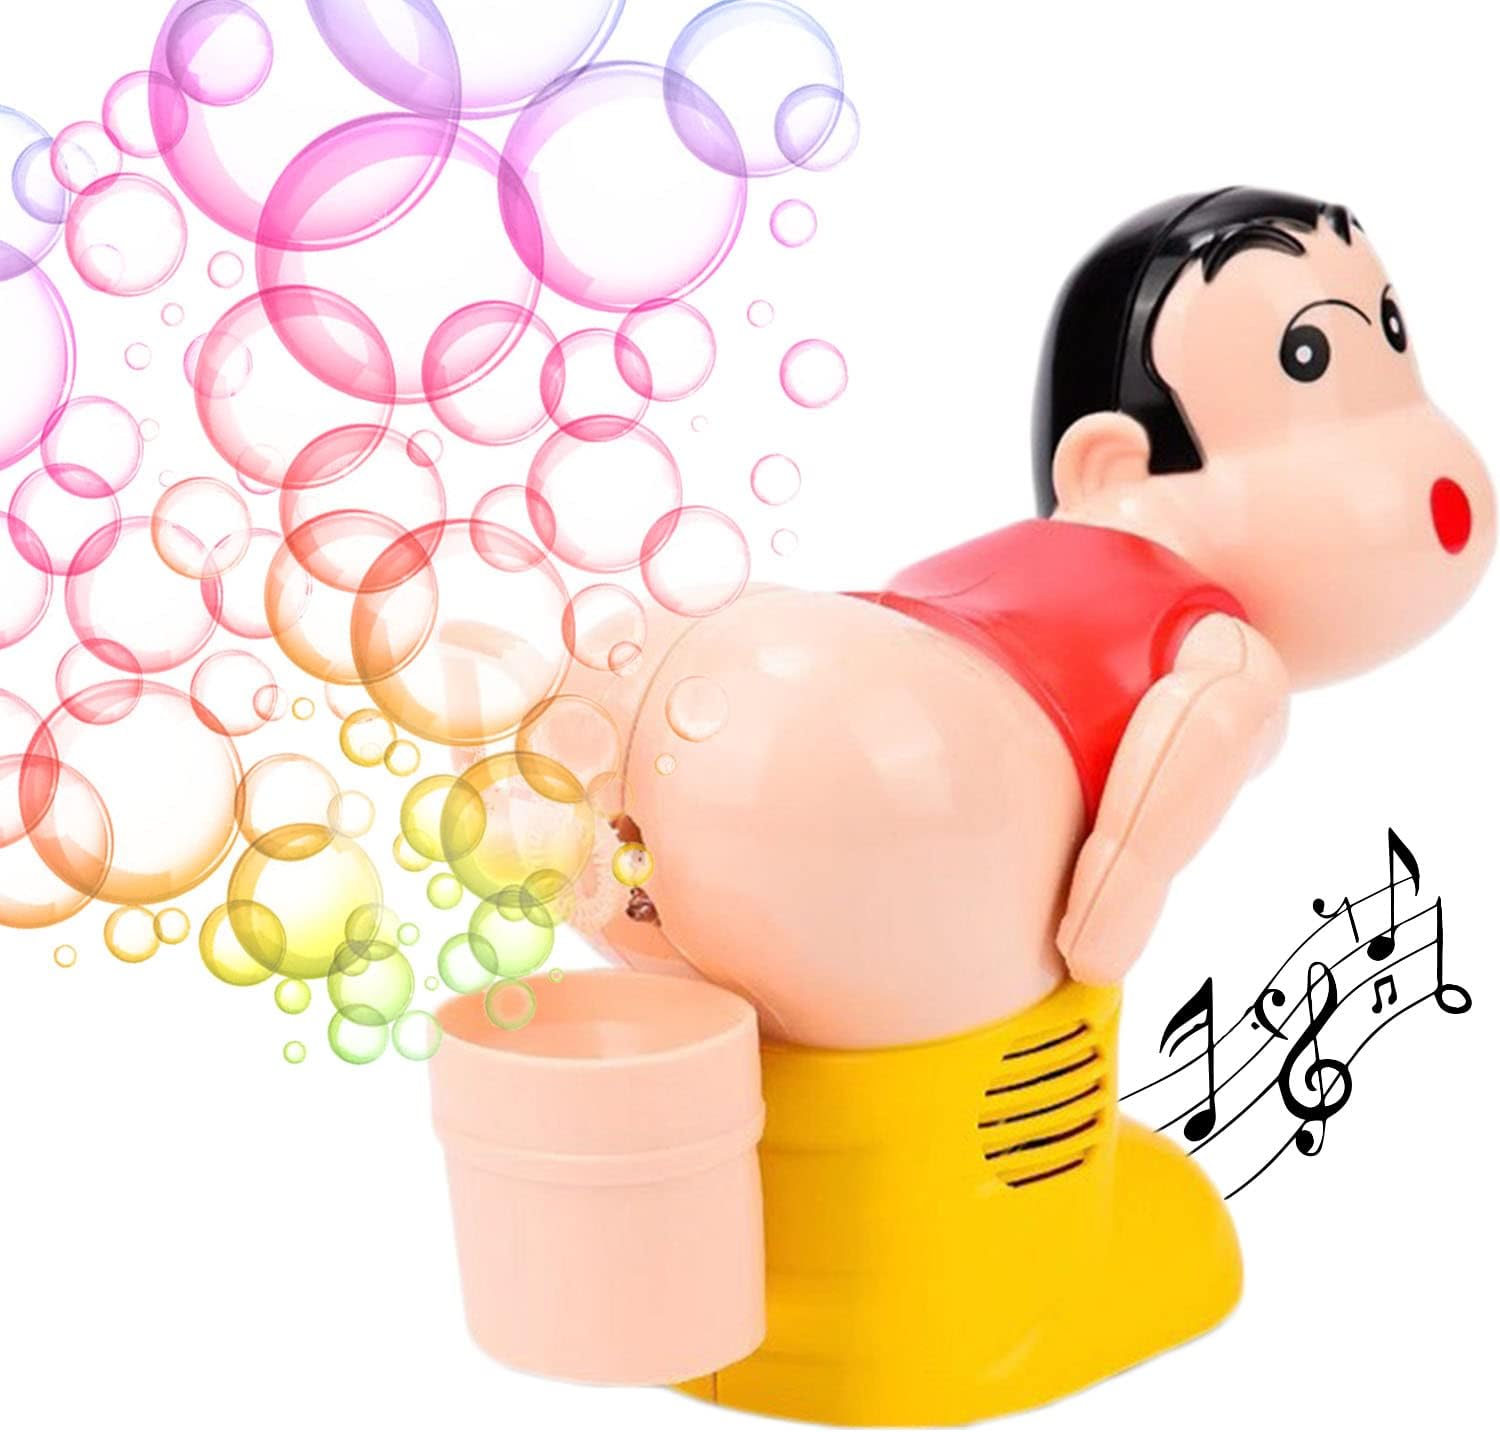 Pet-astic Fun: Fart Bubble Blower!